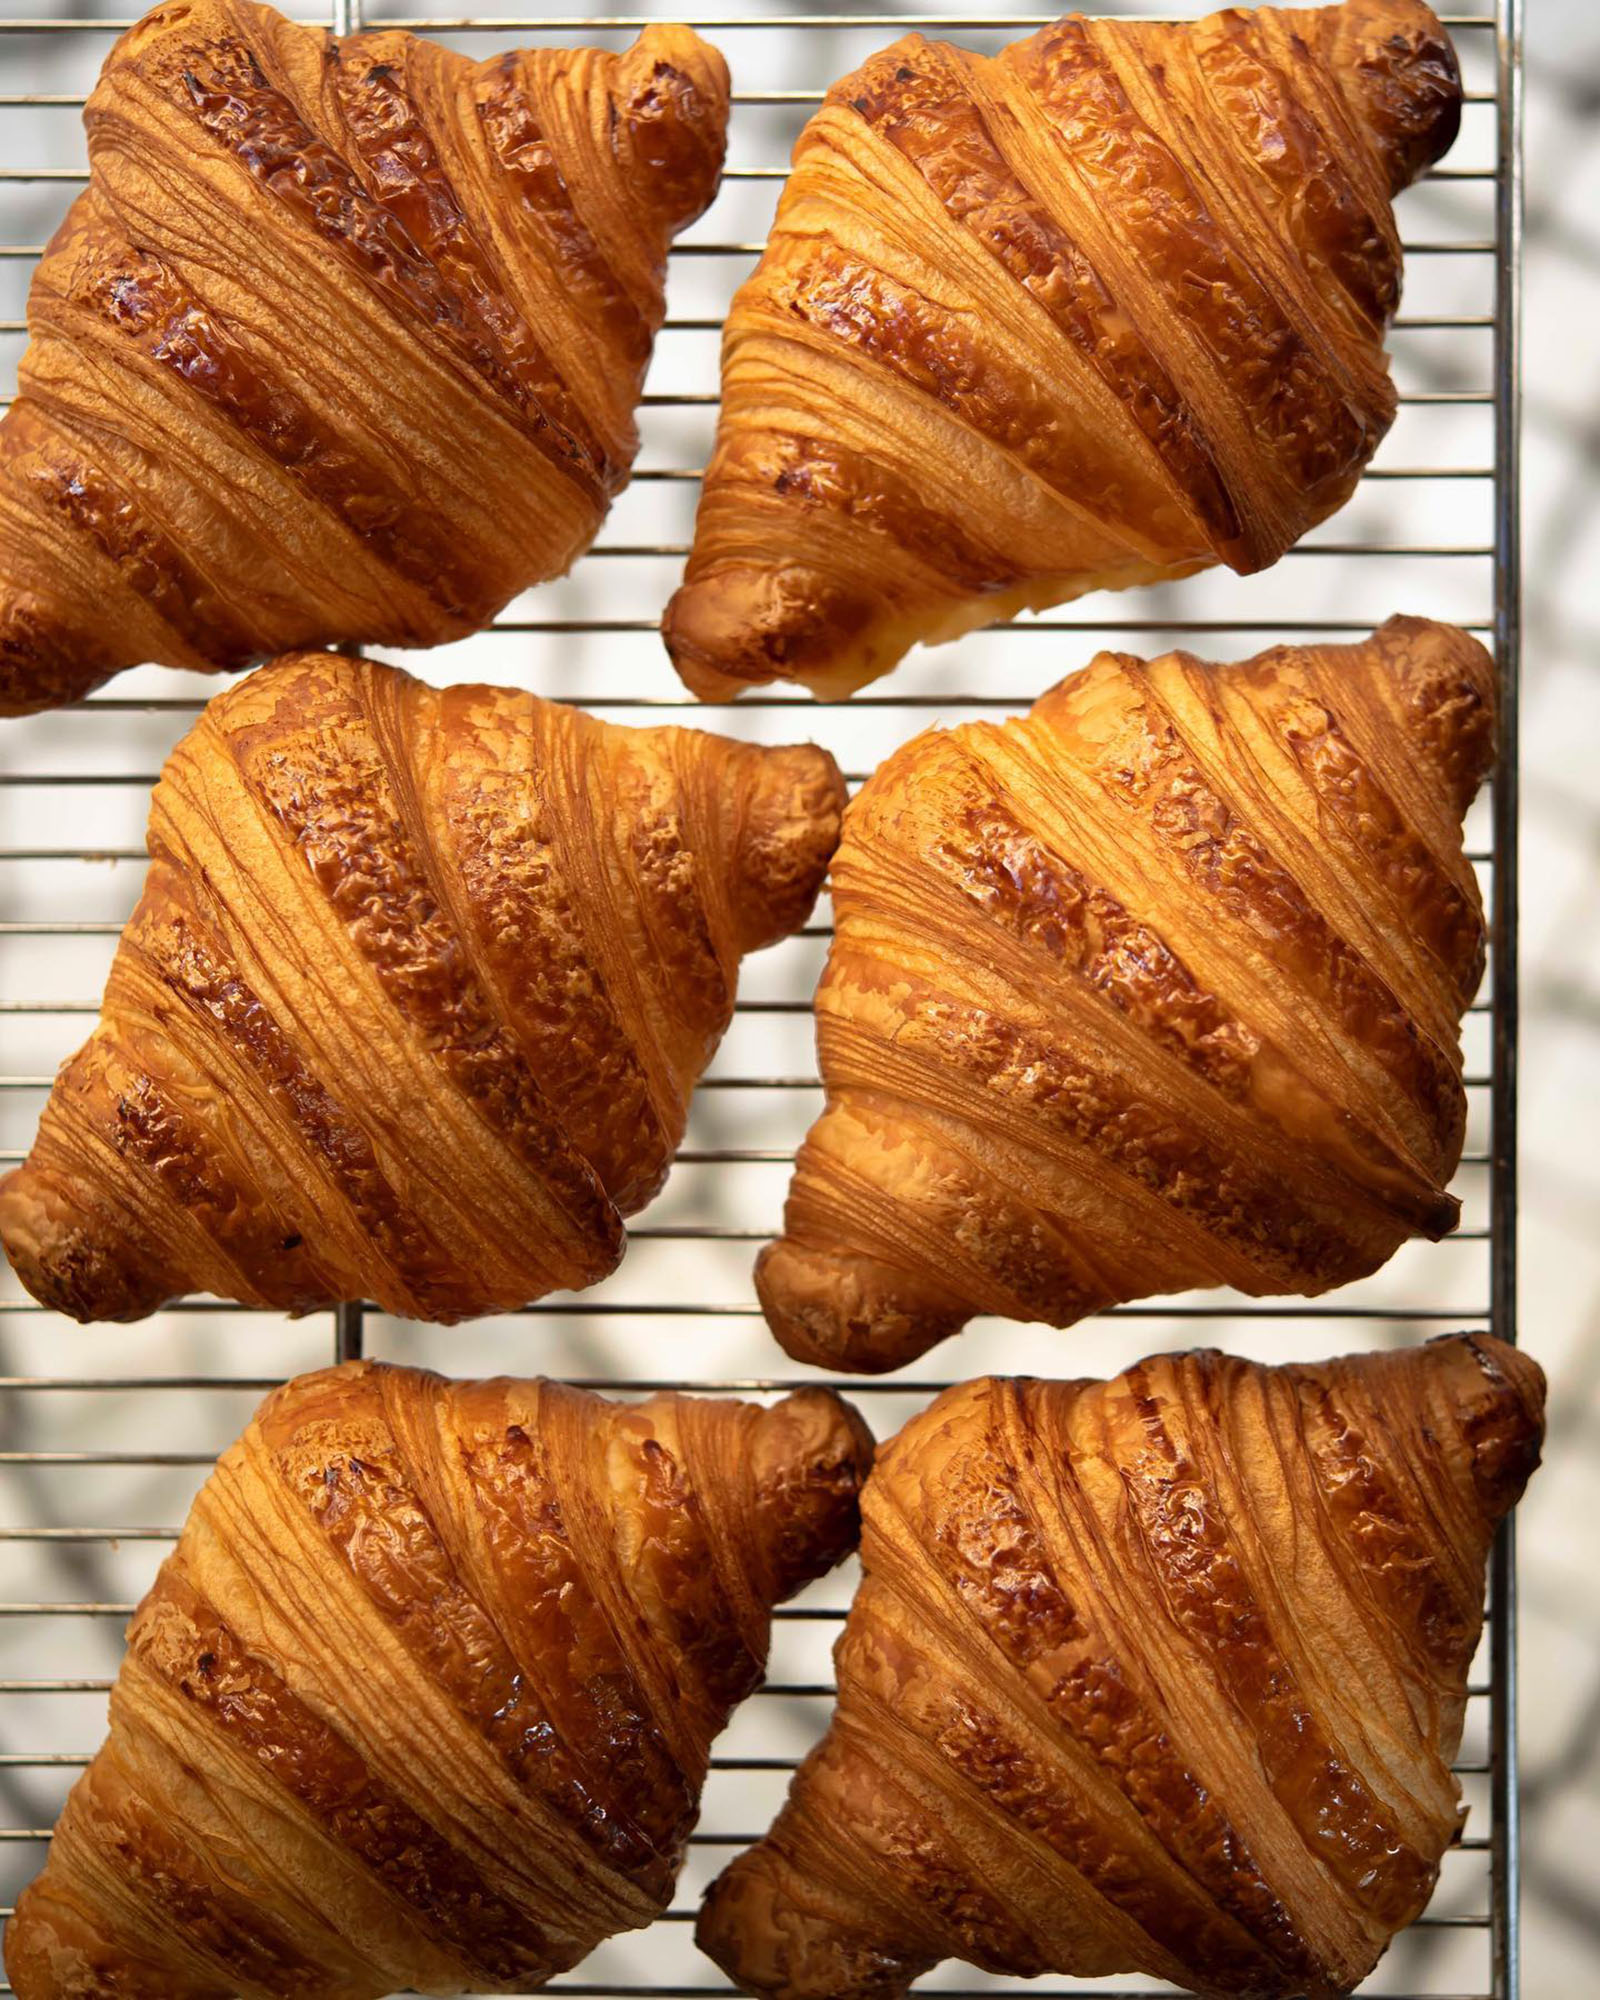 Croissants from Stohrer in Paris.